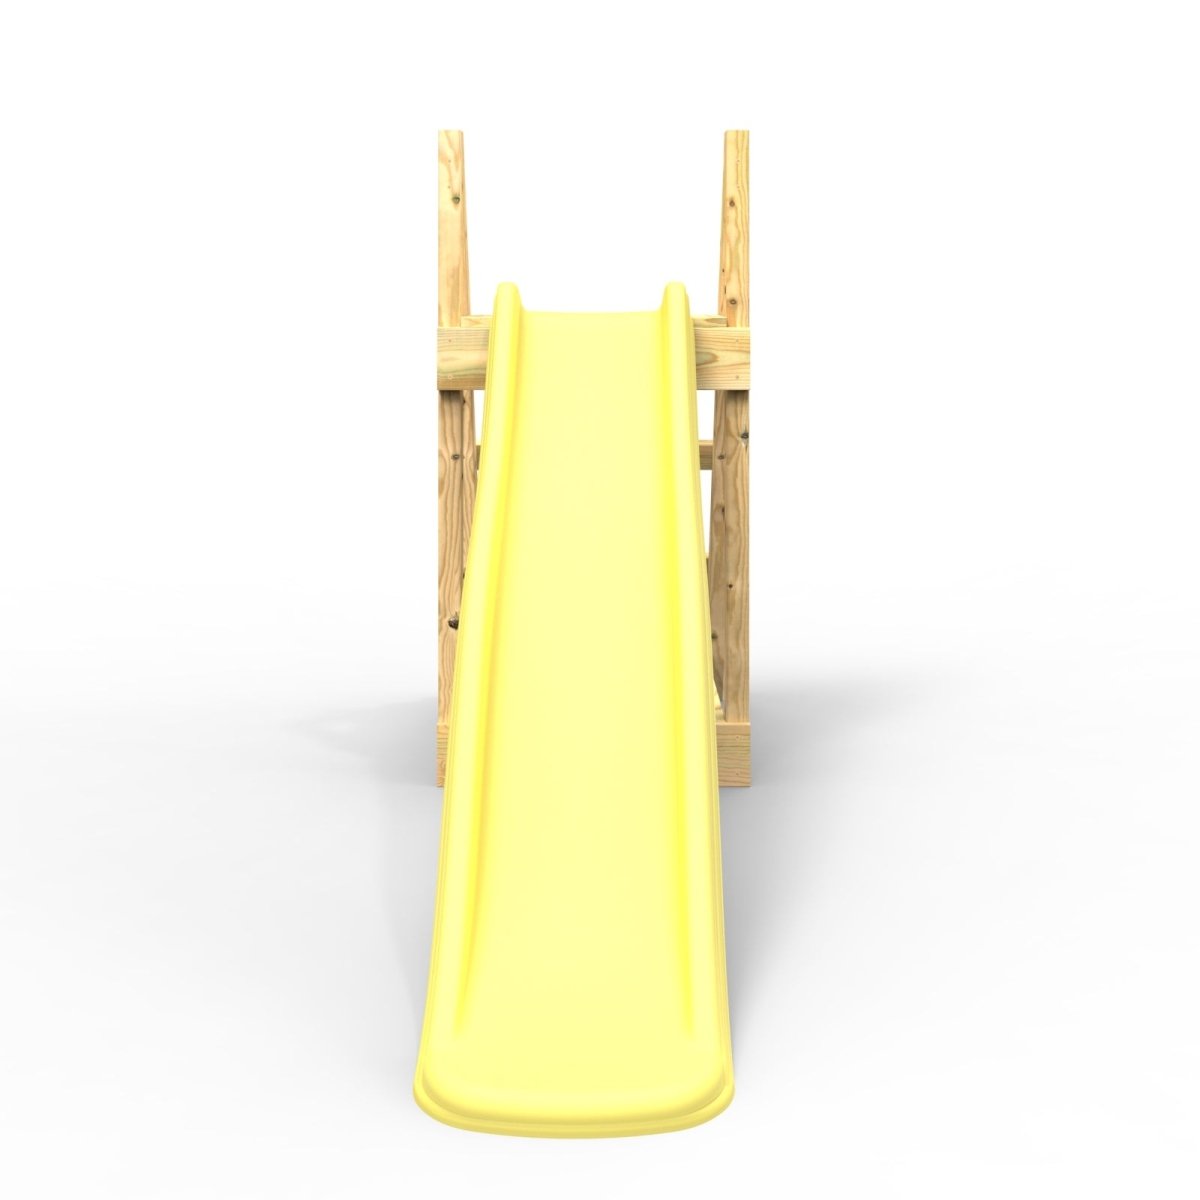 Rebo Garden Wave Free Standing Water Slide with Wooden Platform - 6Ft Slide Yellow